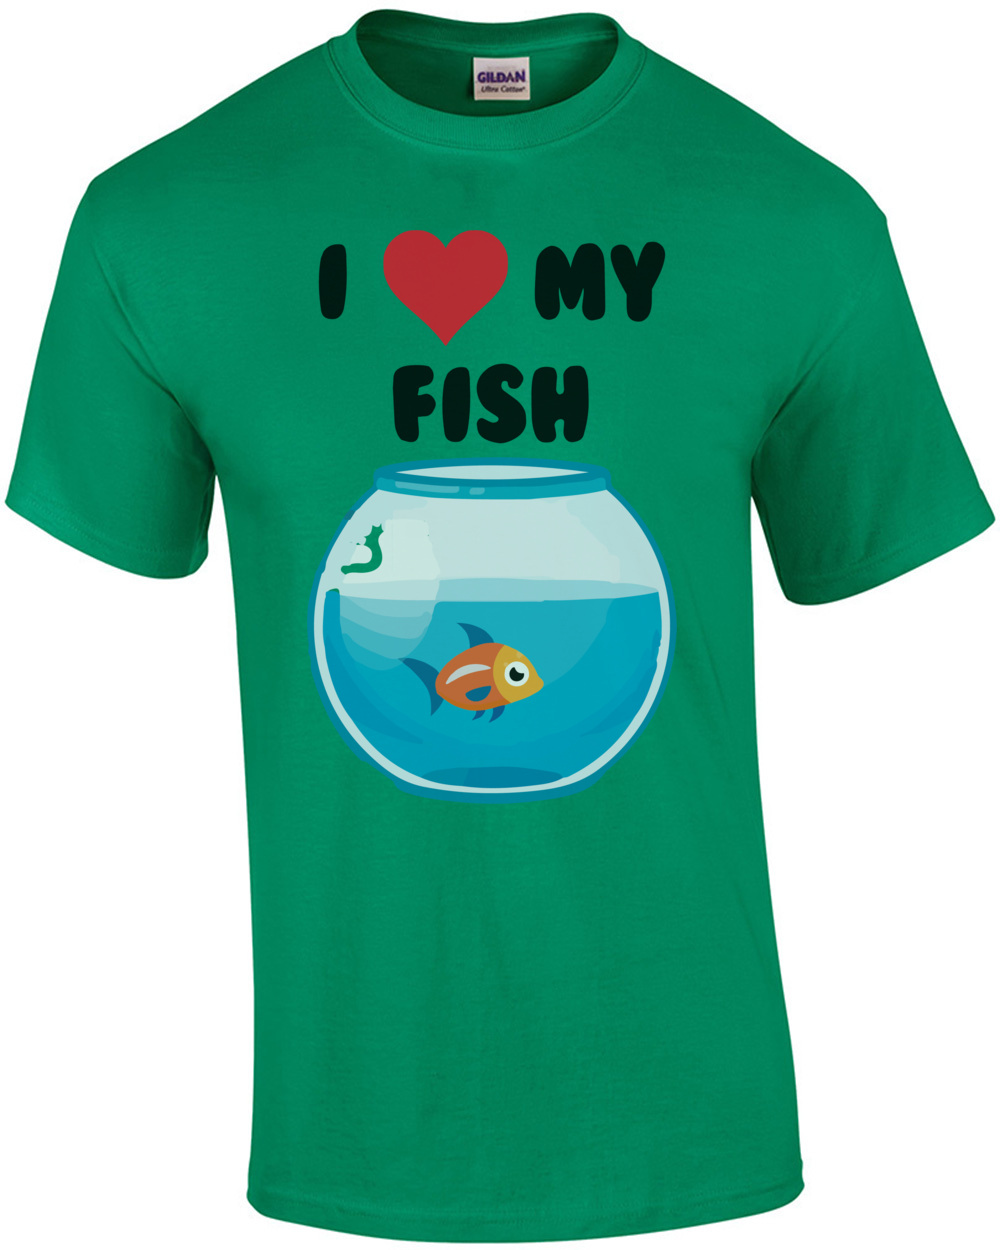 I love my fish - fish t-shirt